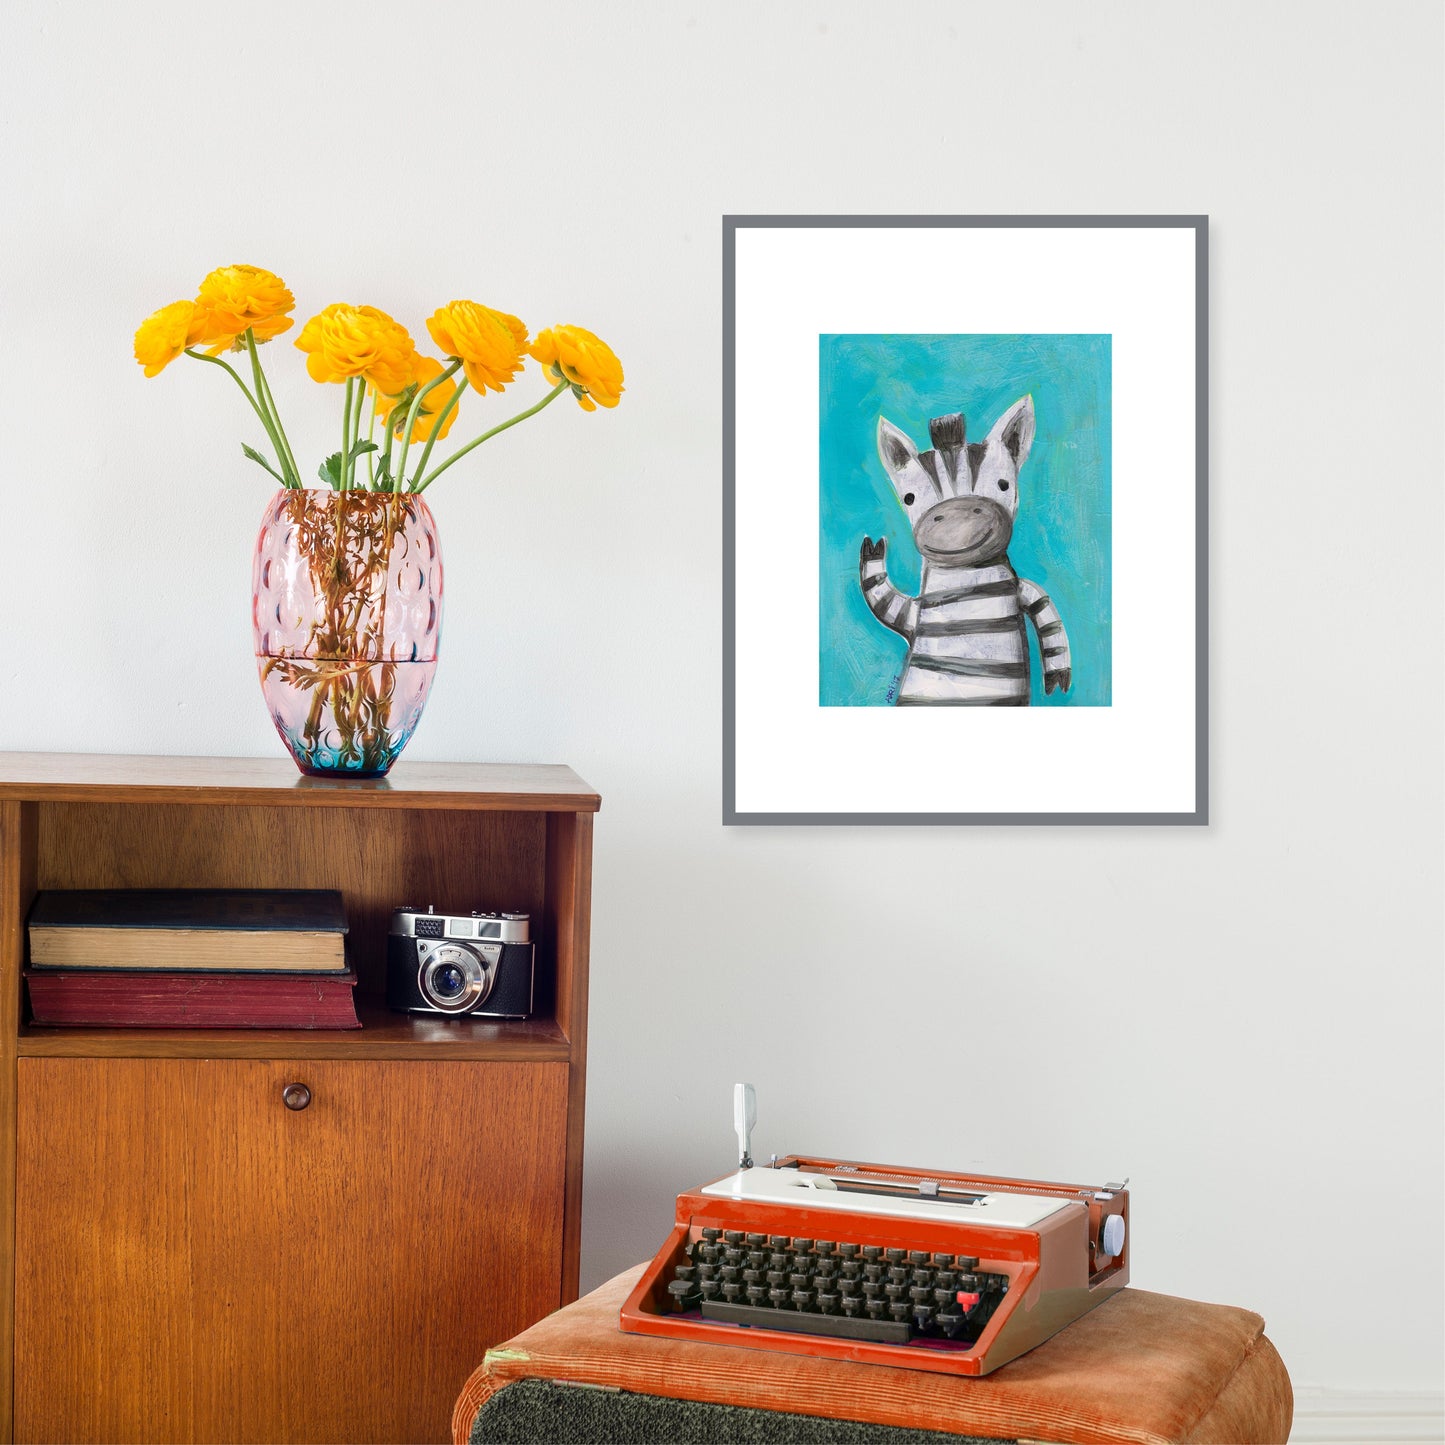 ART PRINT - Zebra Says Hello, featuring art by Adriana Bergstrom (Adriprints)